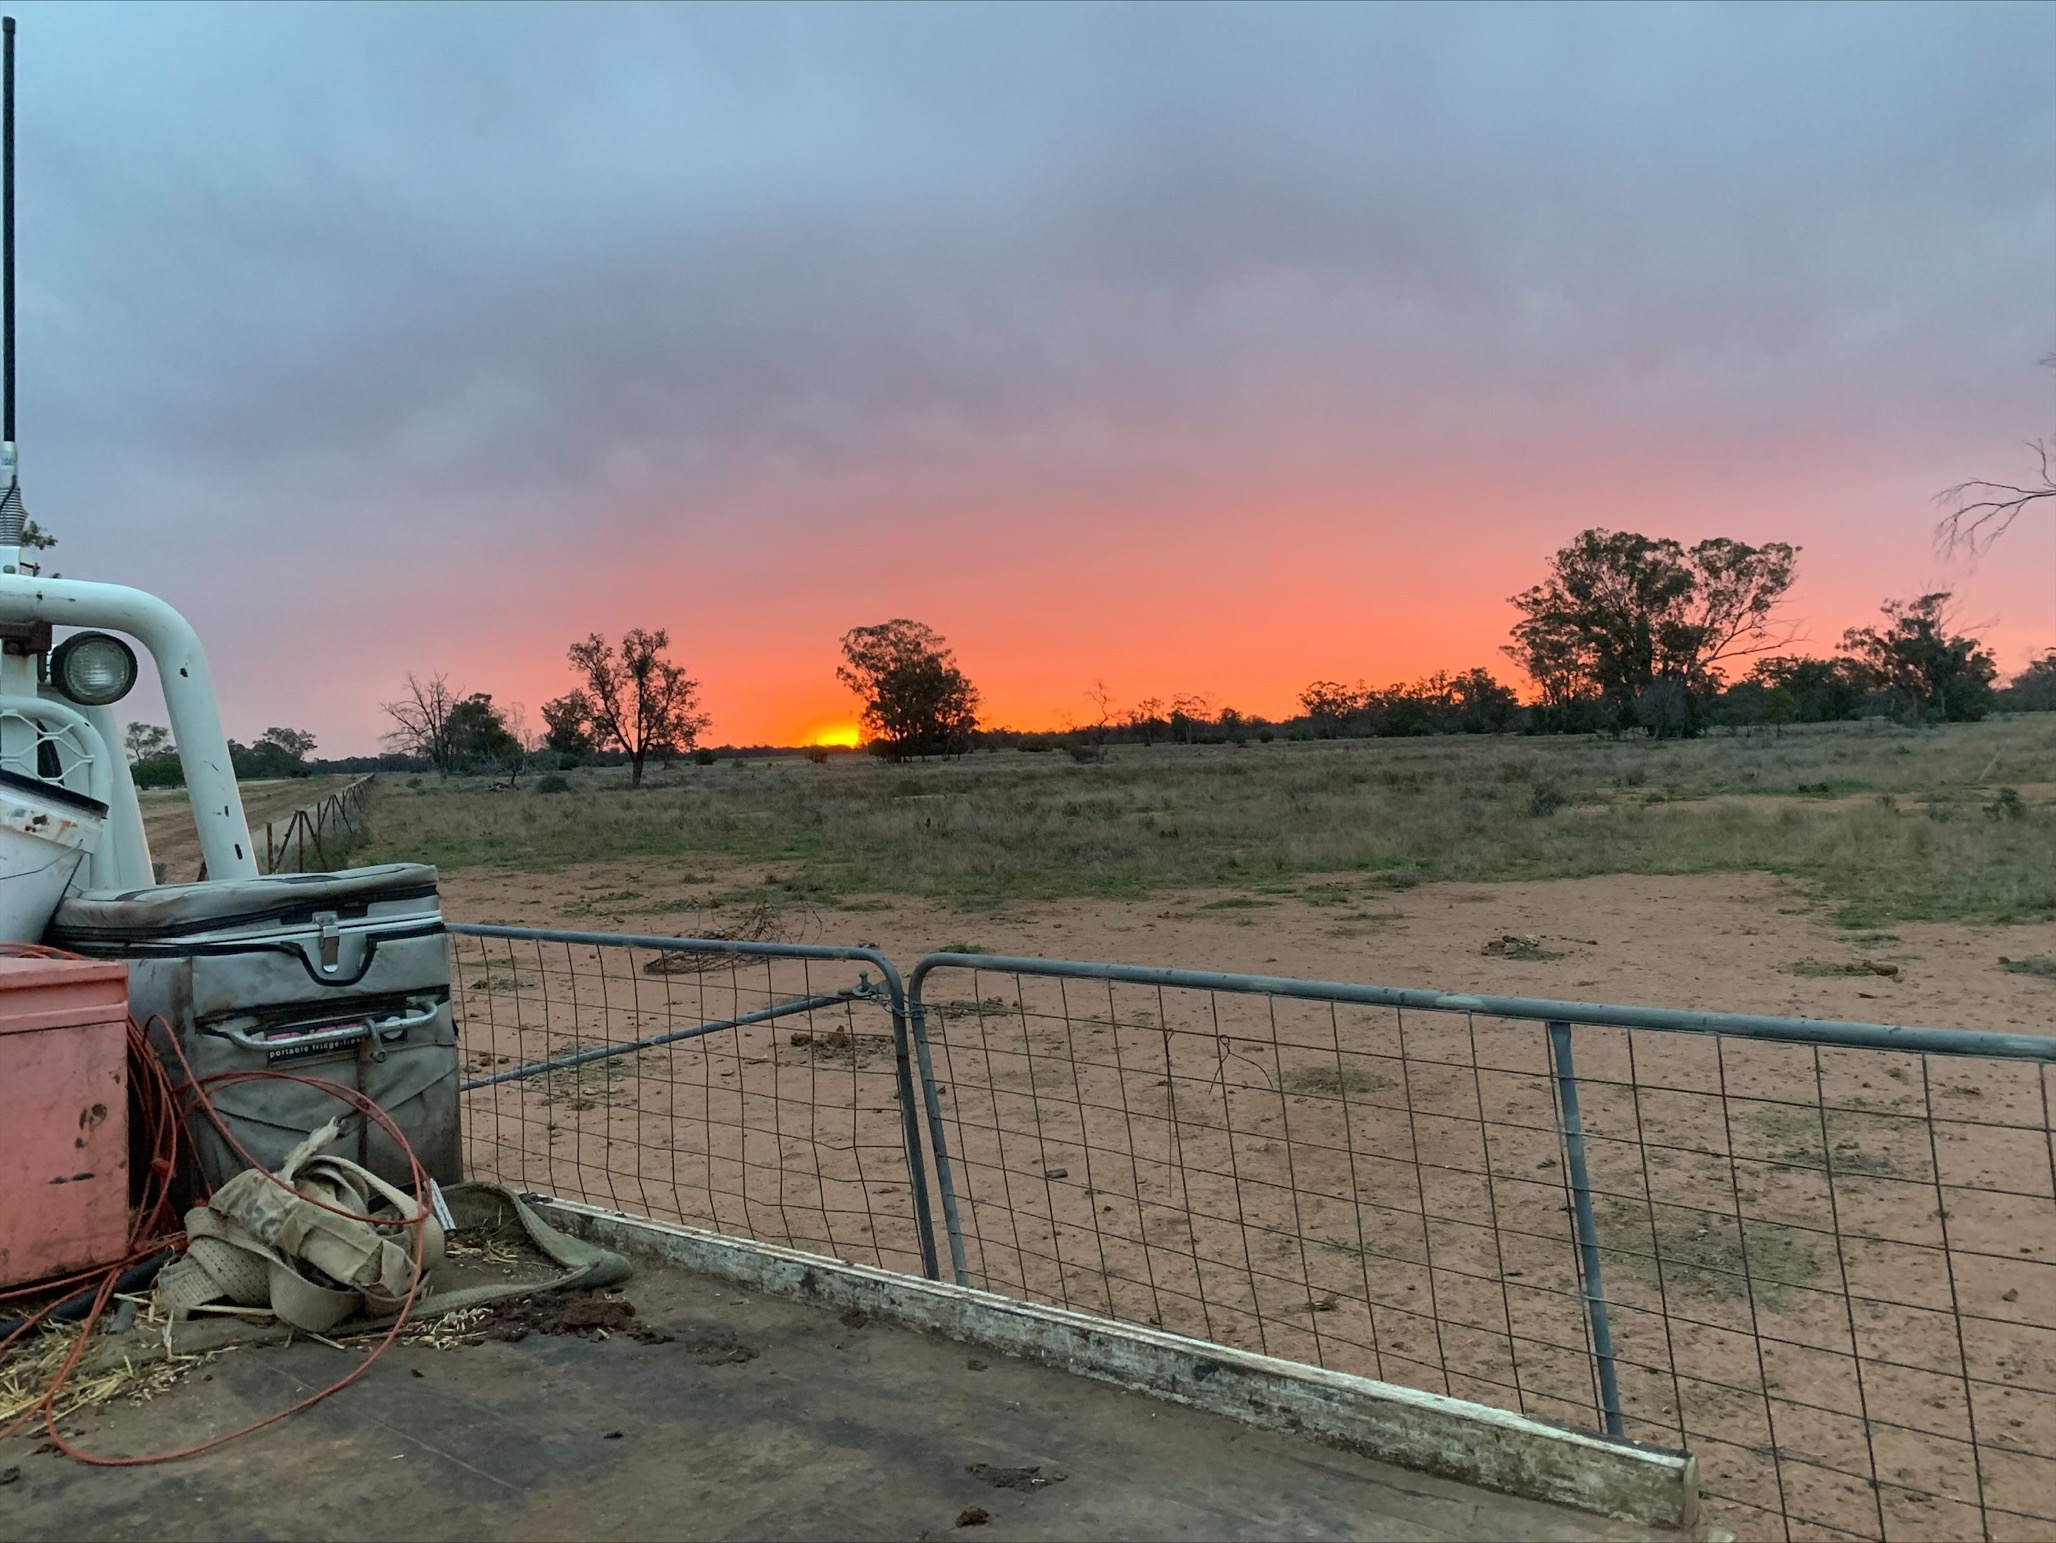 Wee Waa High School student Axel Currey’s photo essay of sunsets on farm.